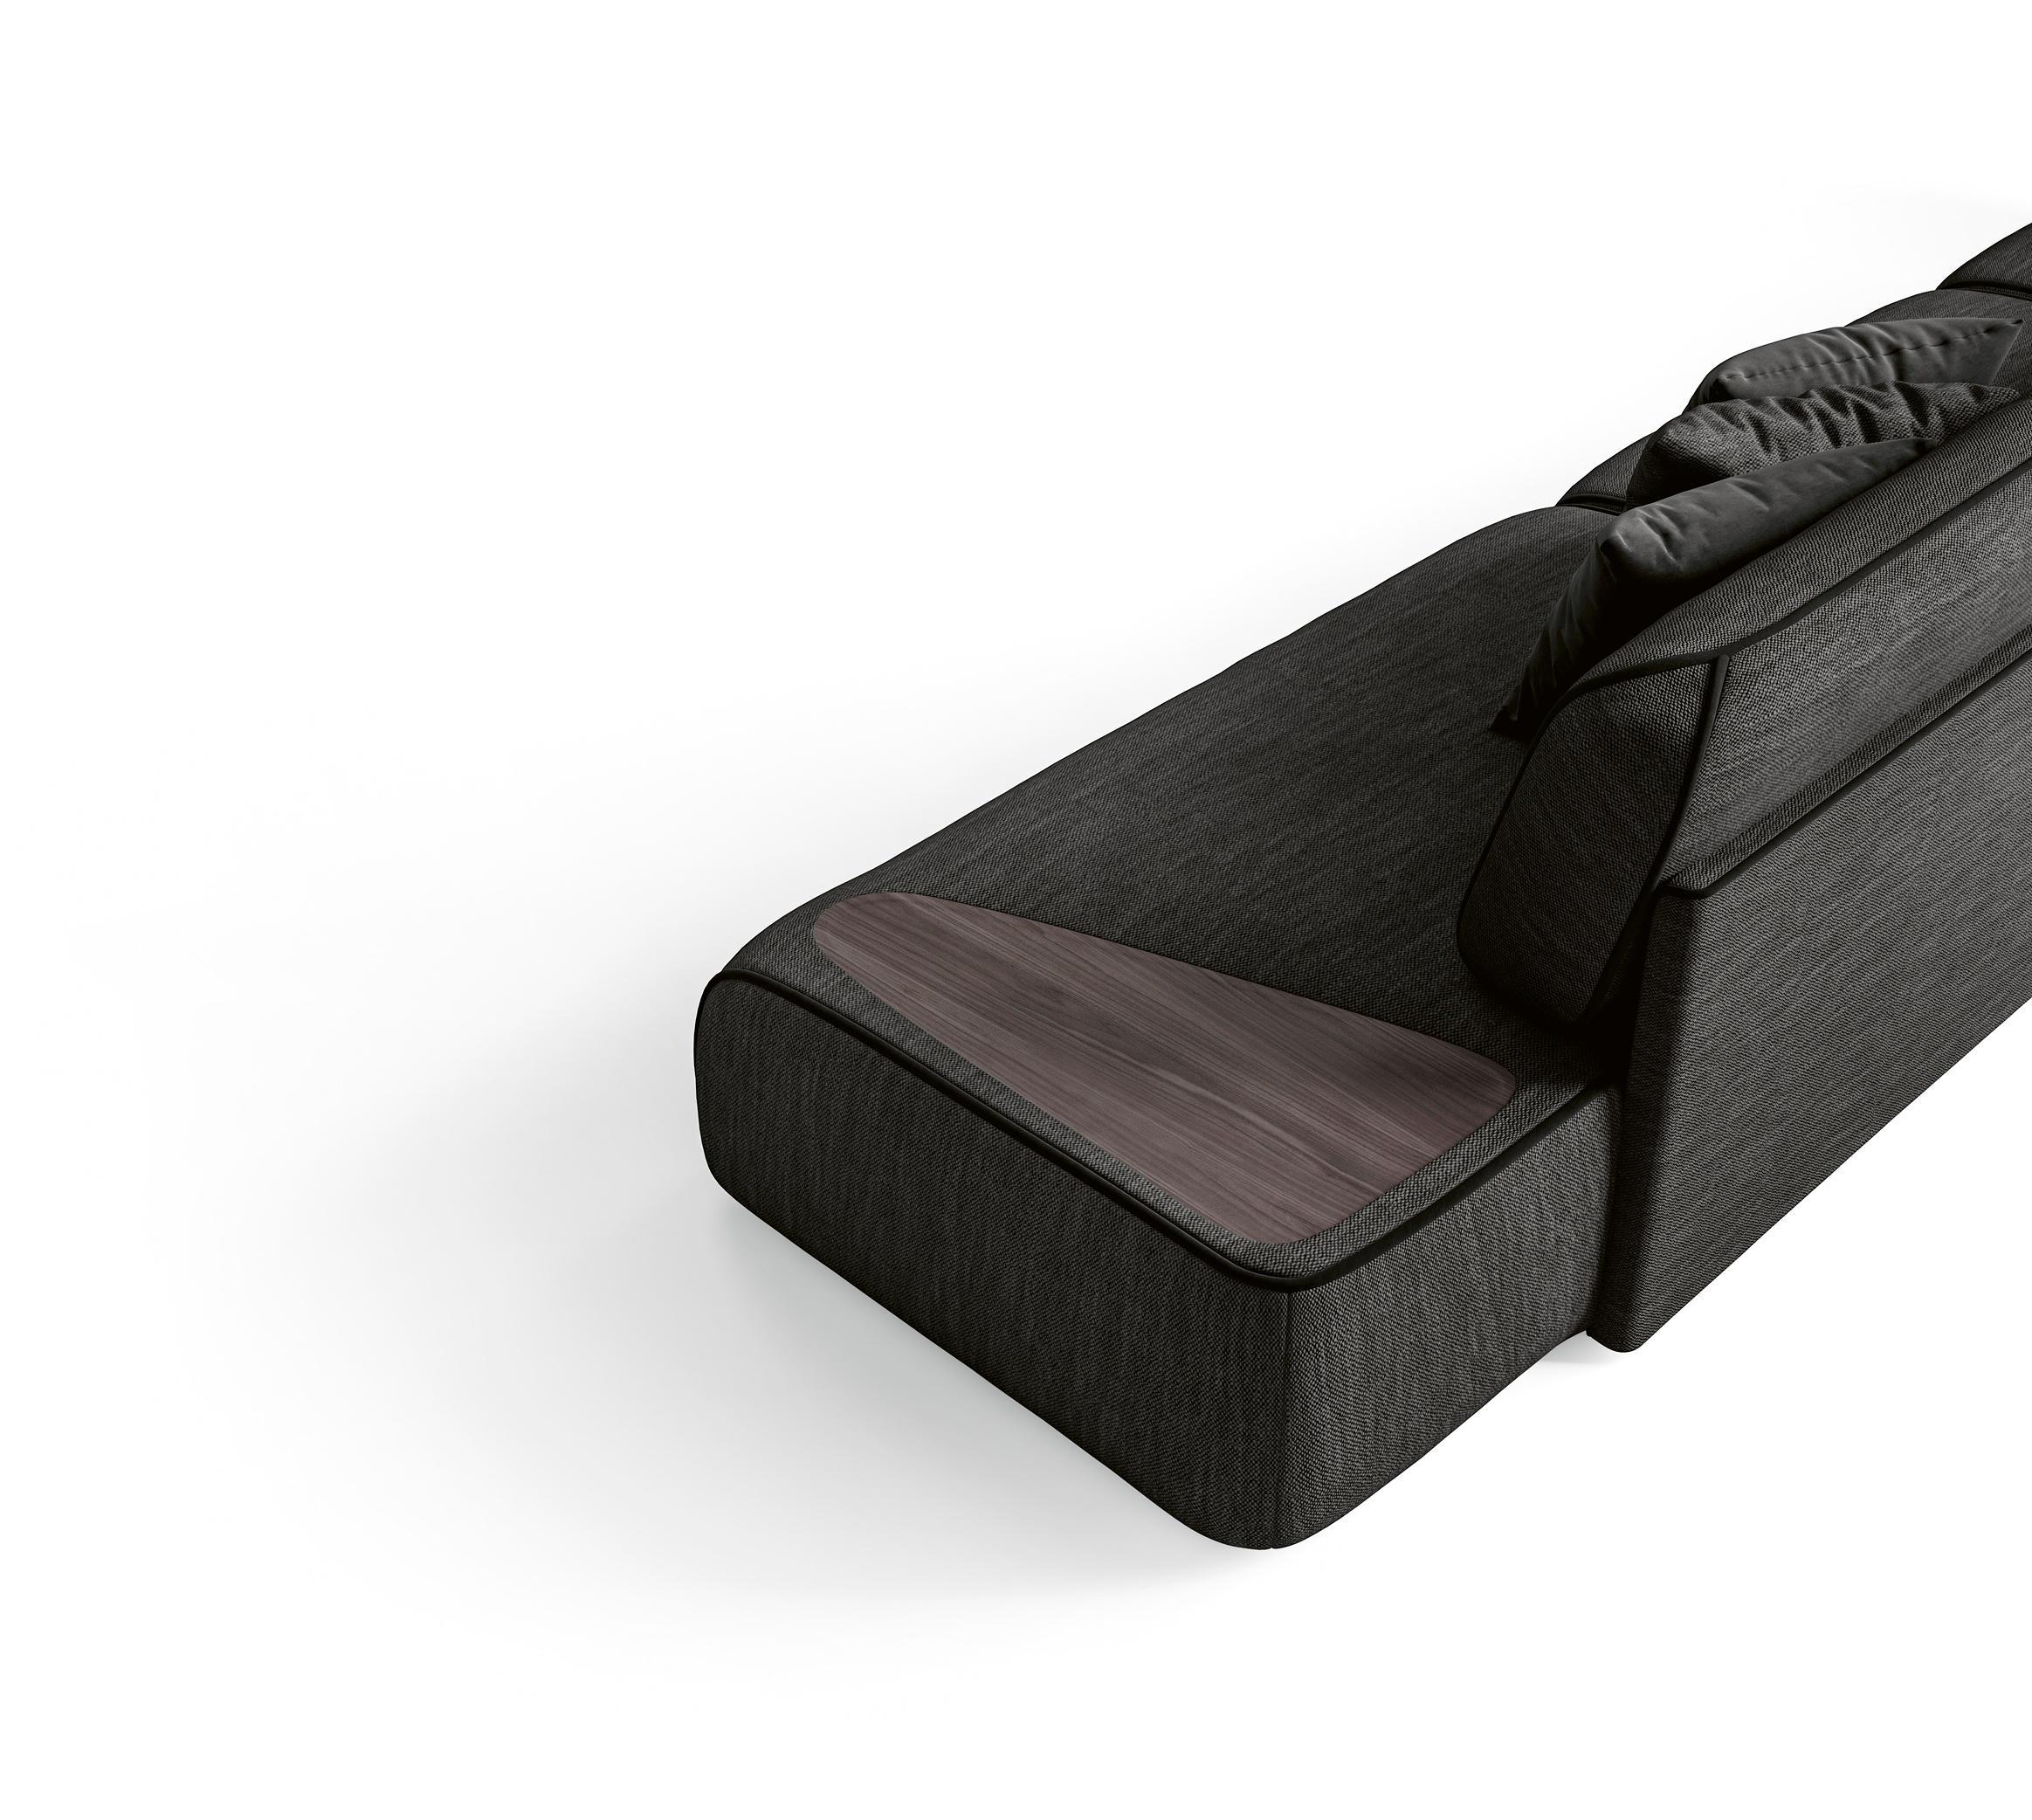 Versatile Modular Sofa